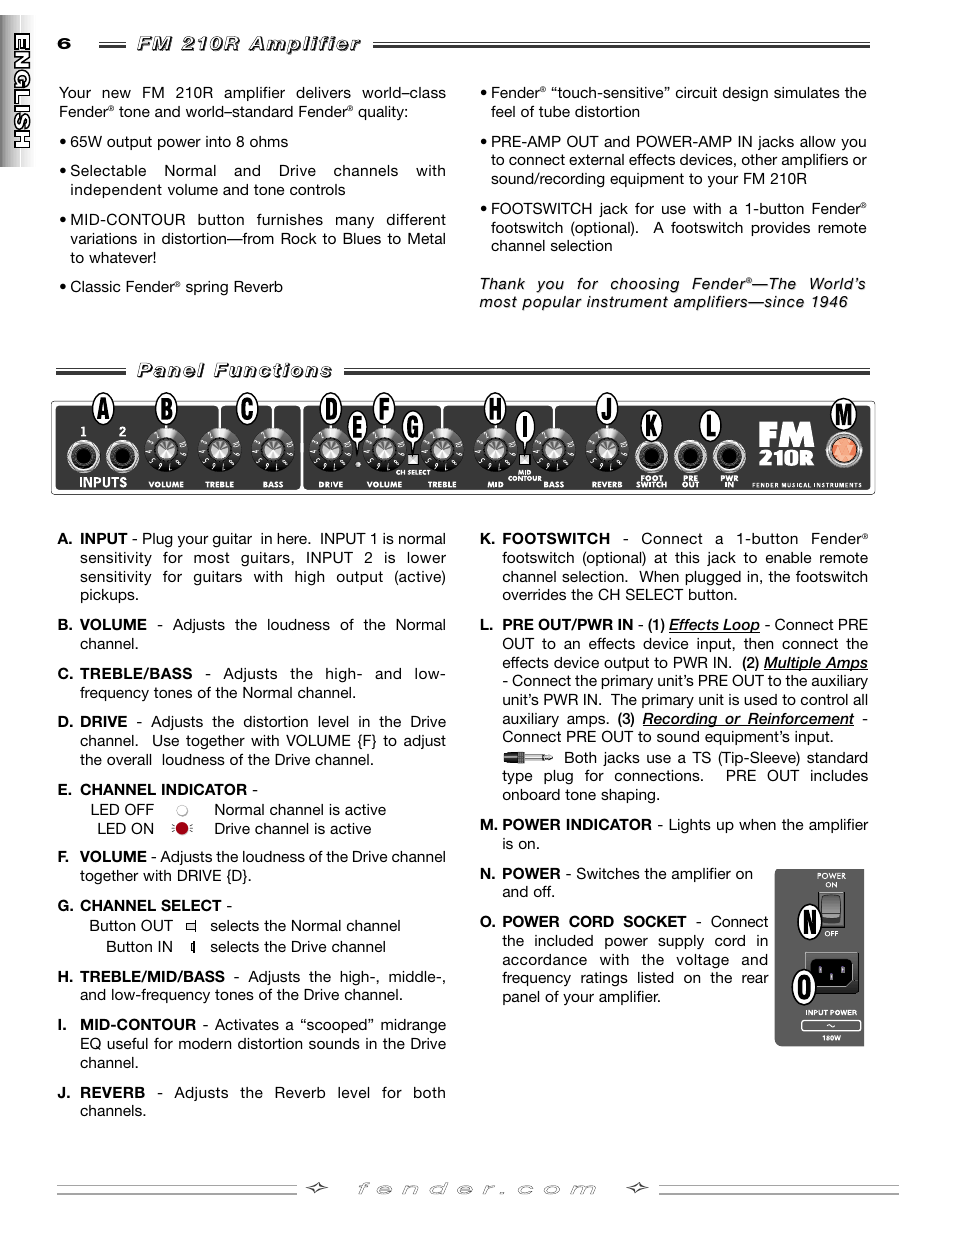 Fender FM 210R User Manual | Page 6 / 20